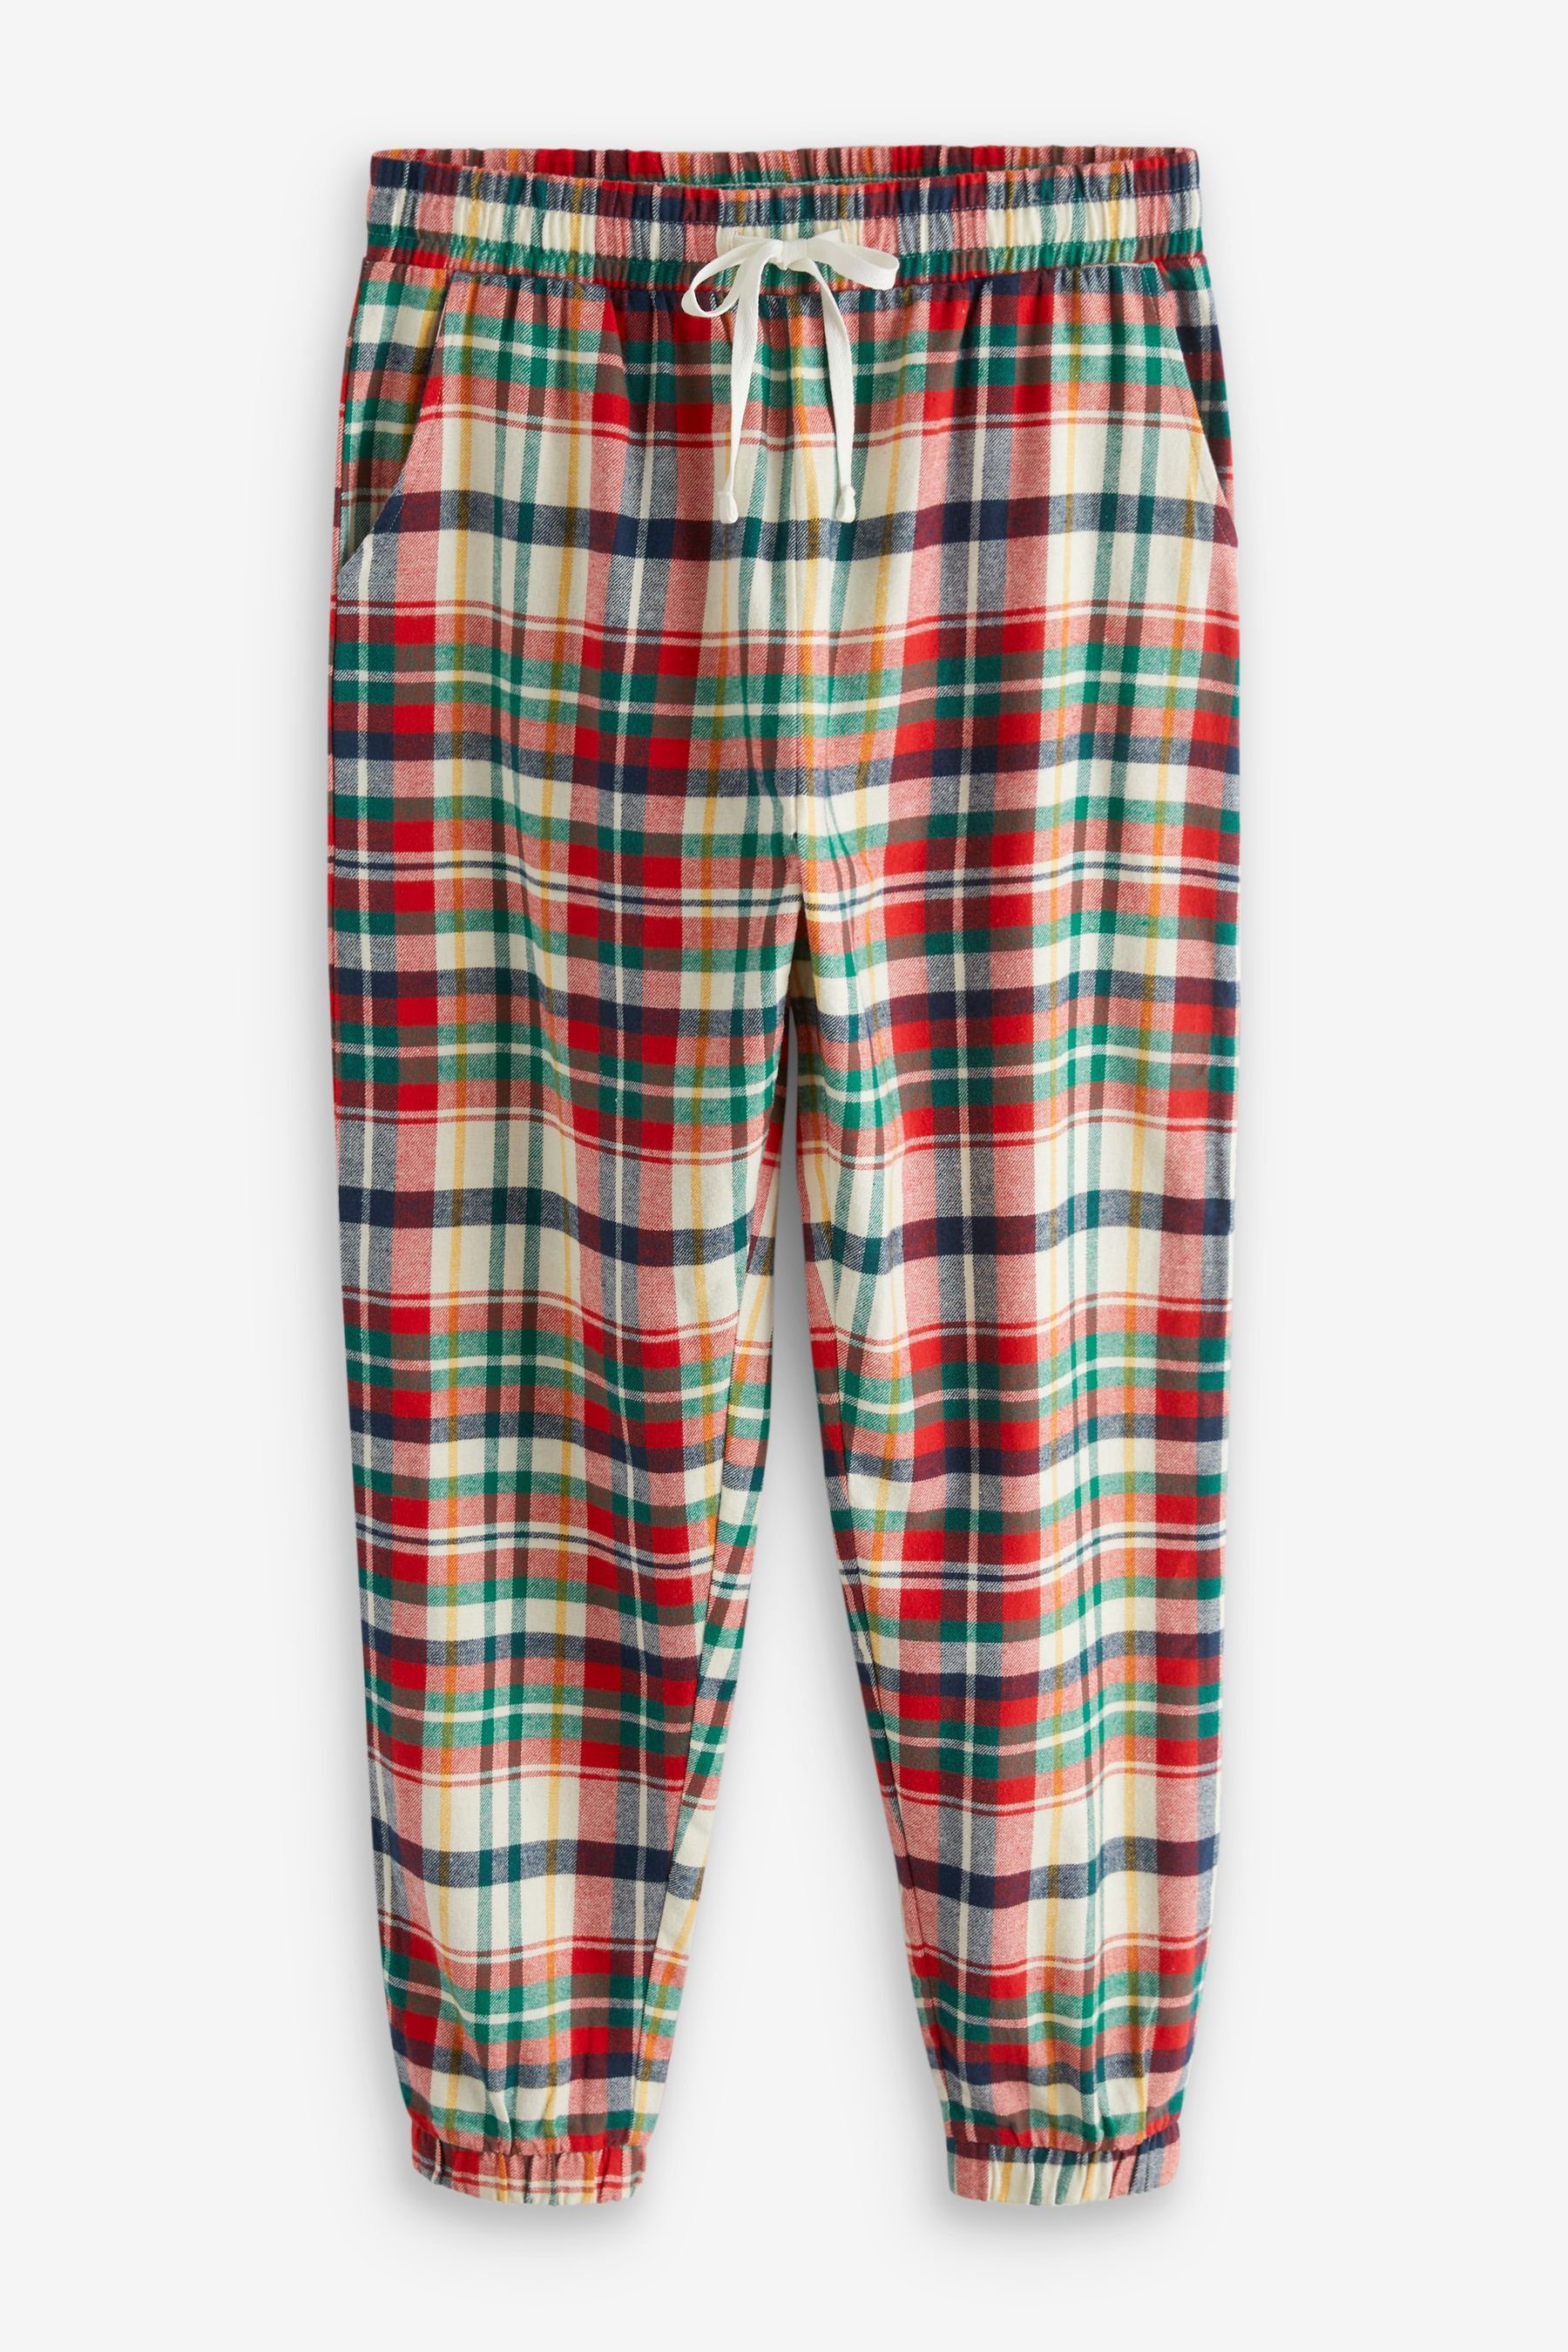 tlg) Baumwollpyjama Pyjama (2 für Damen Next (Familienkollektion)